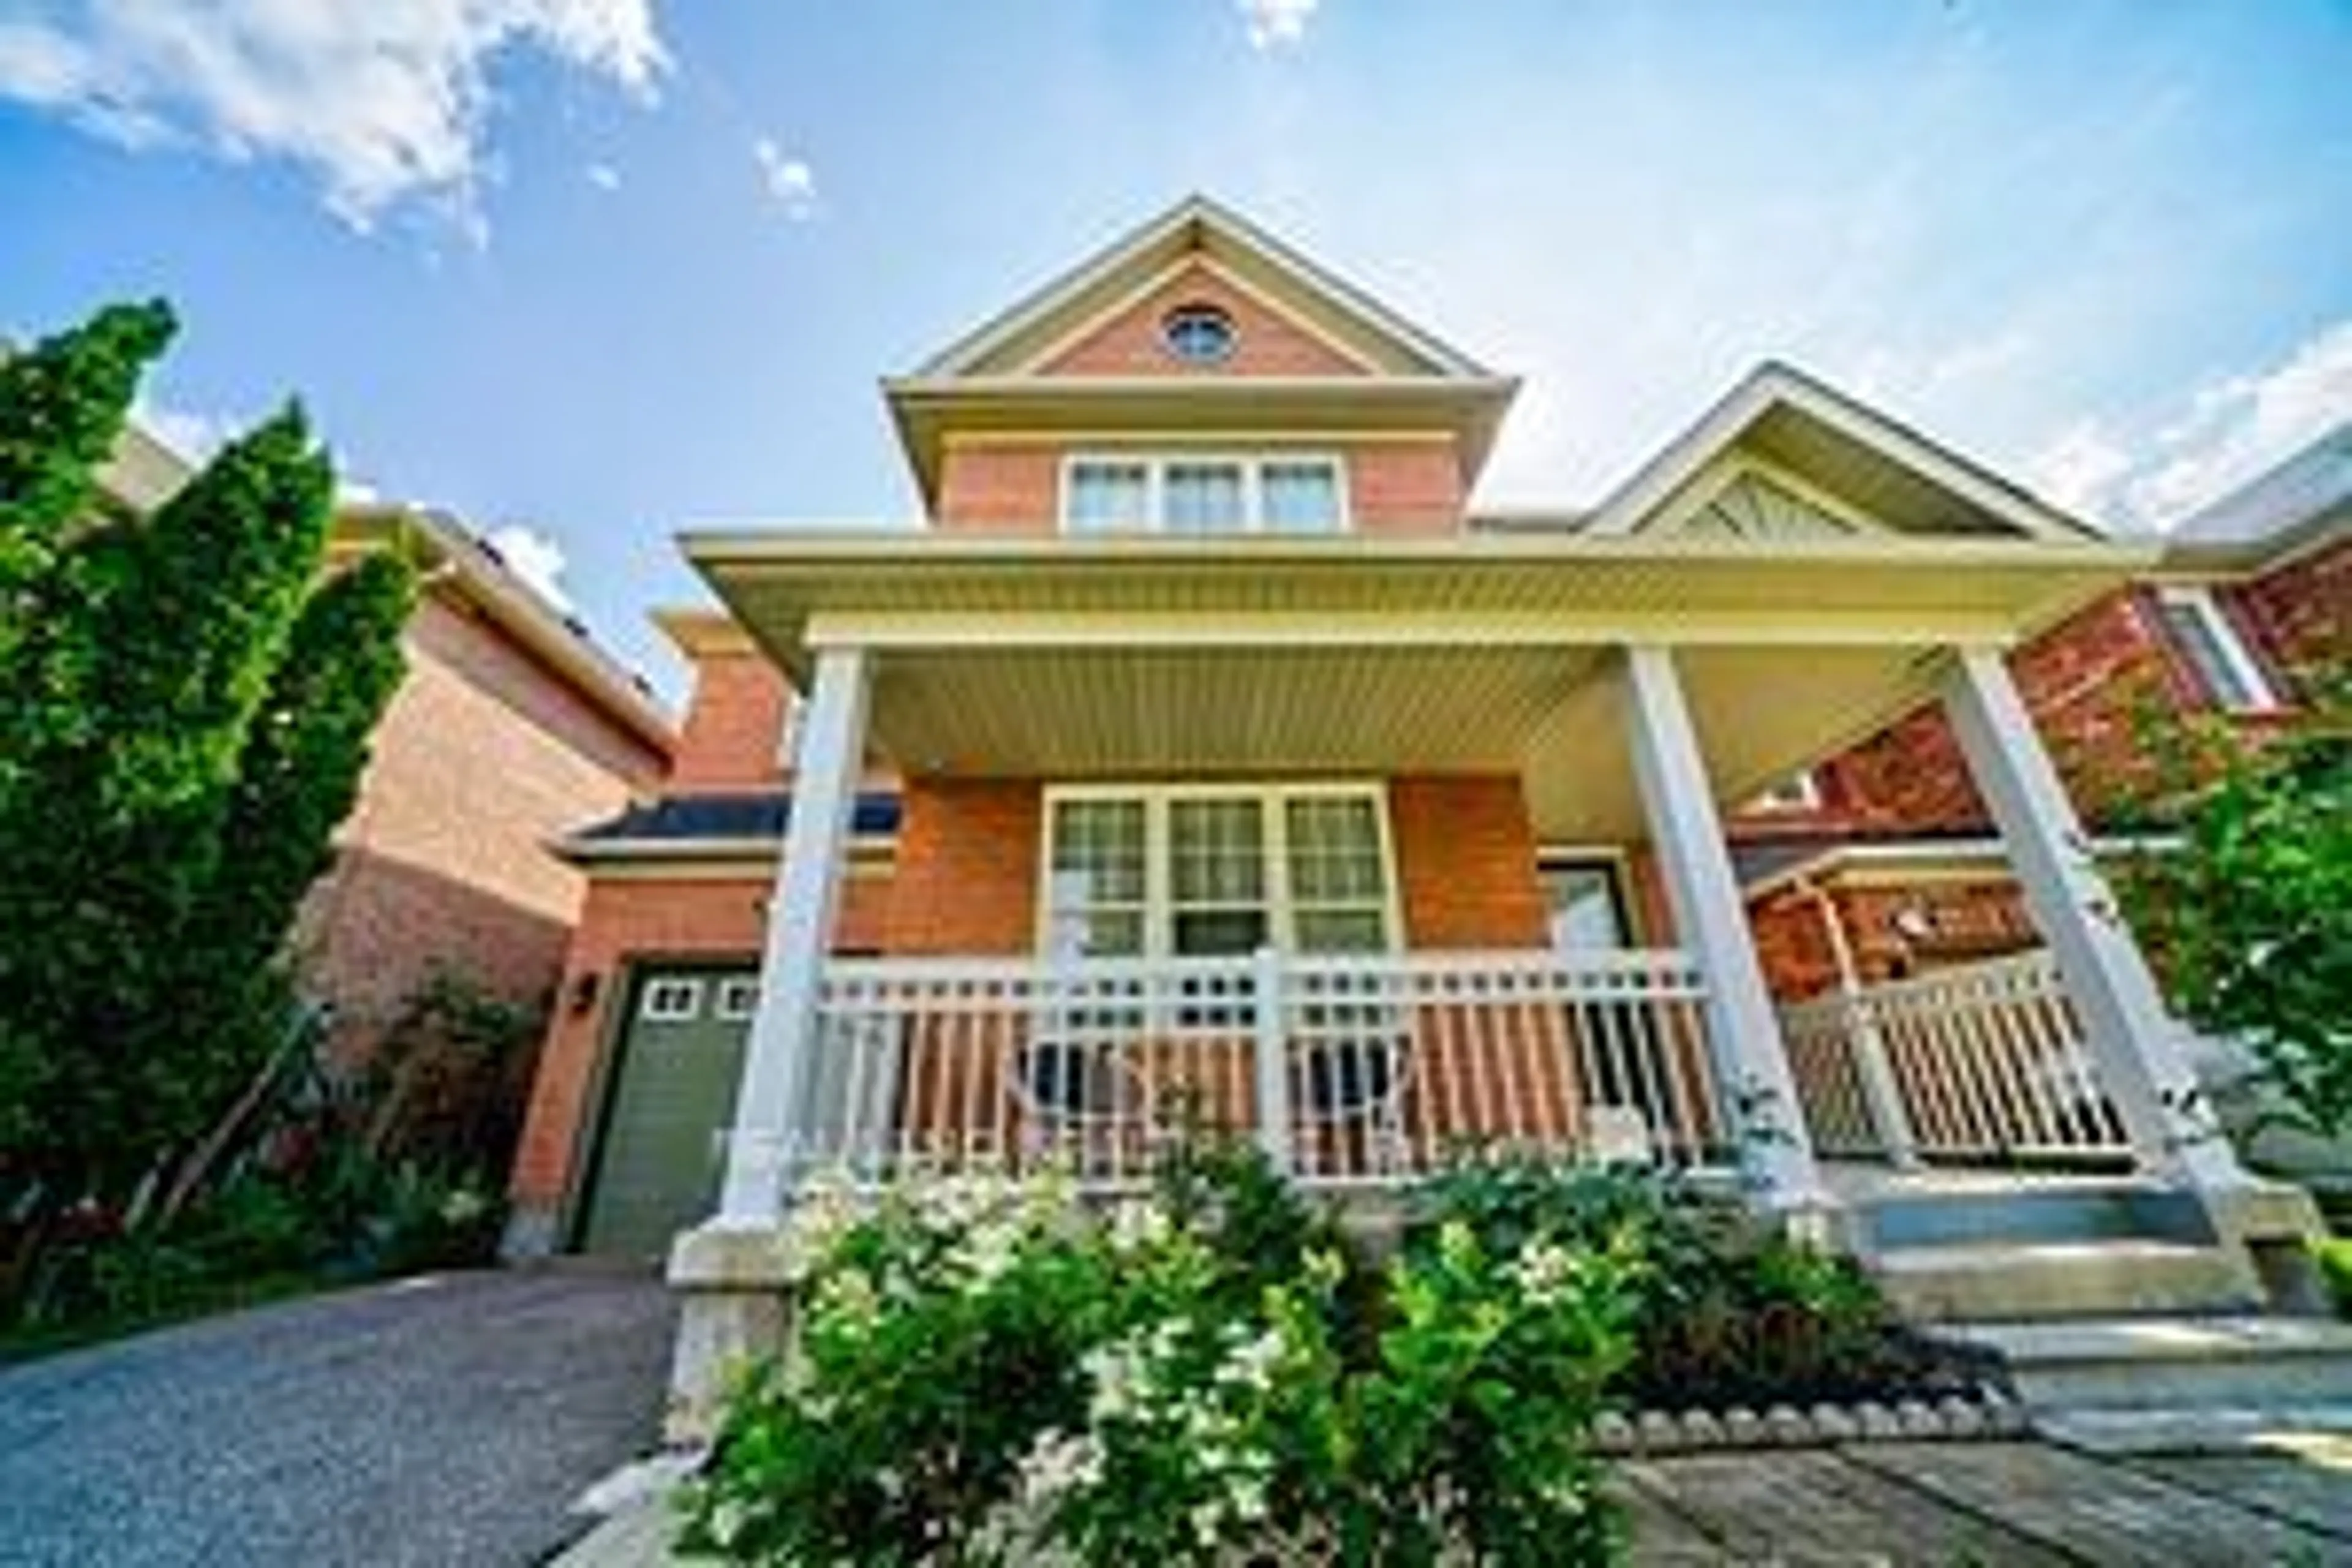 Home with brick exterior material for 39 Roy Rainey Ave, Markham Ontario L6E 2B5